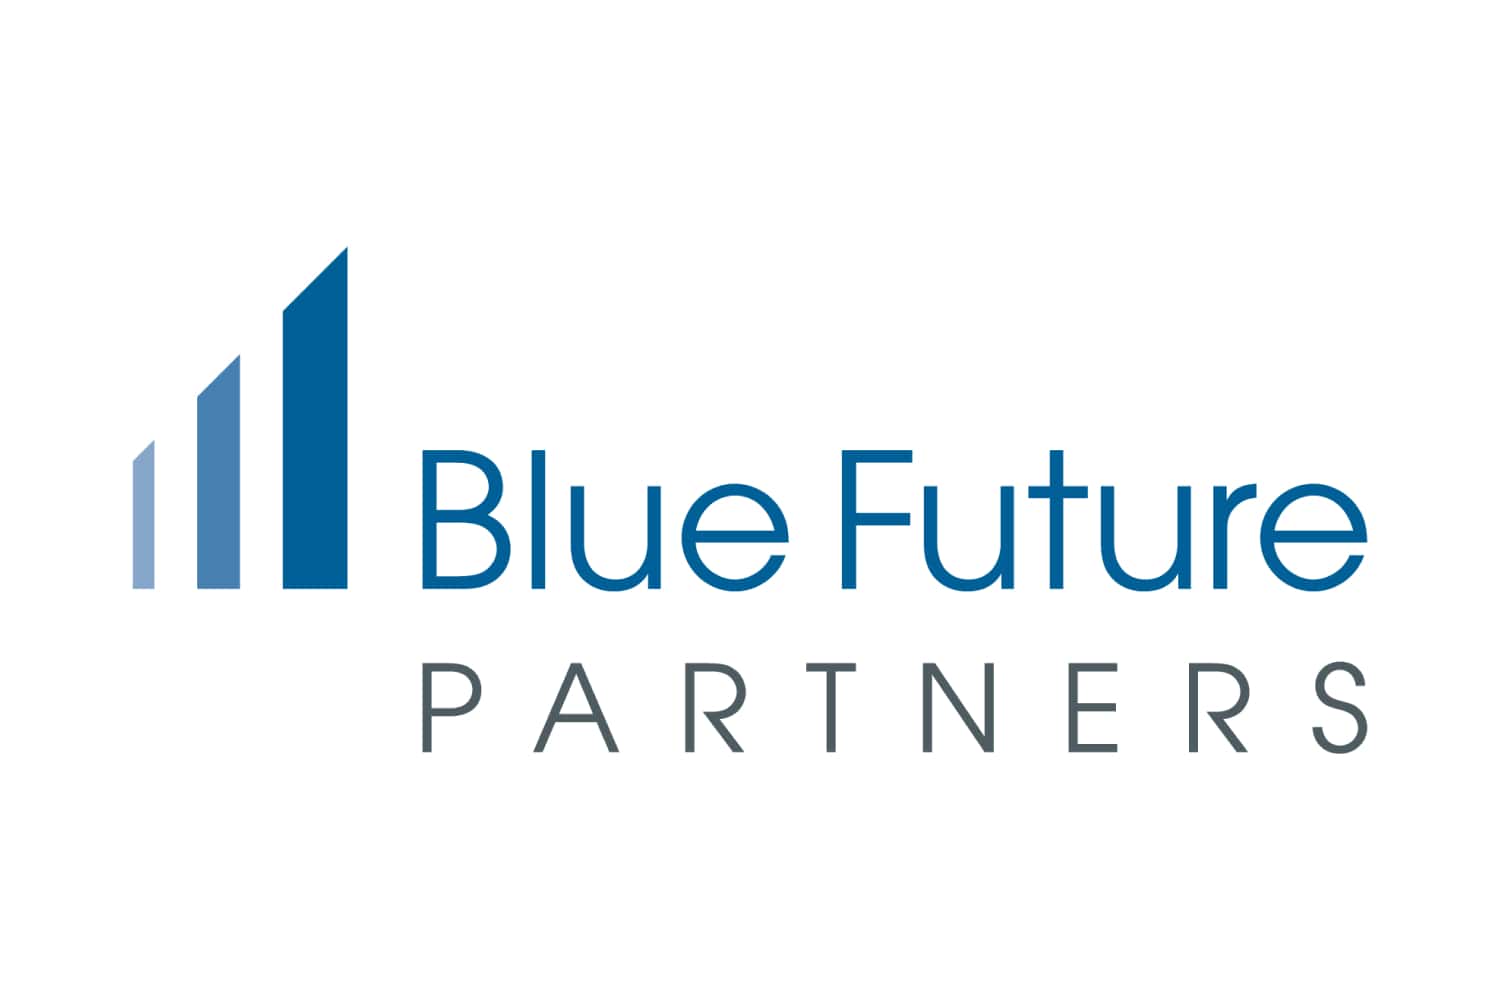 Blue Future Partners logo